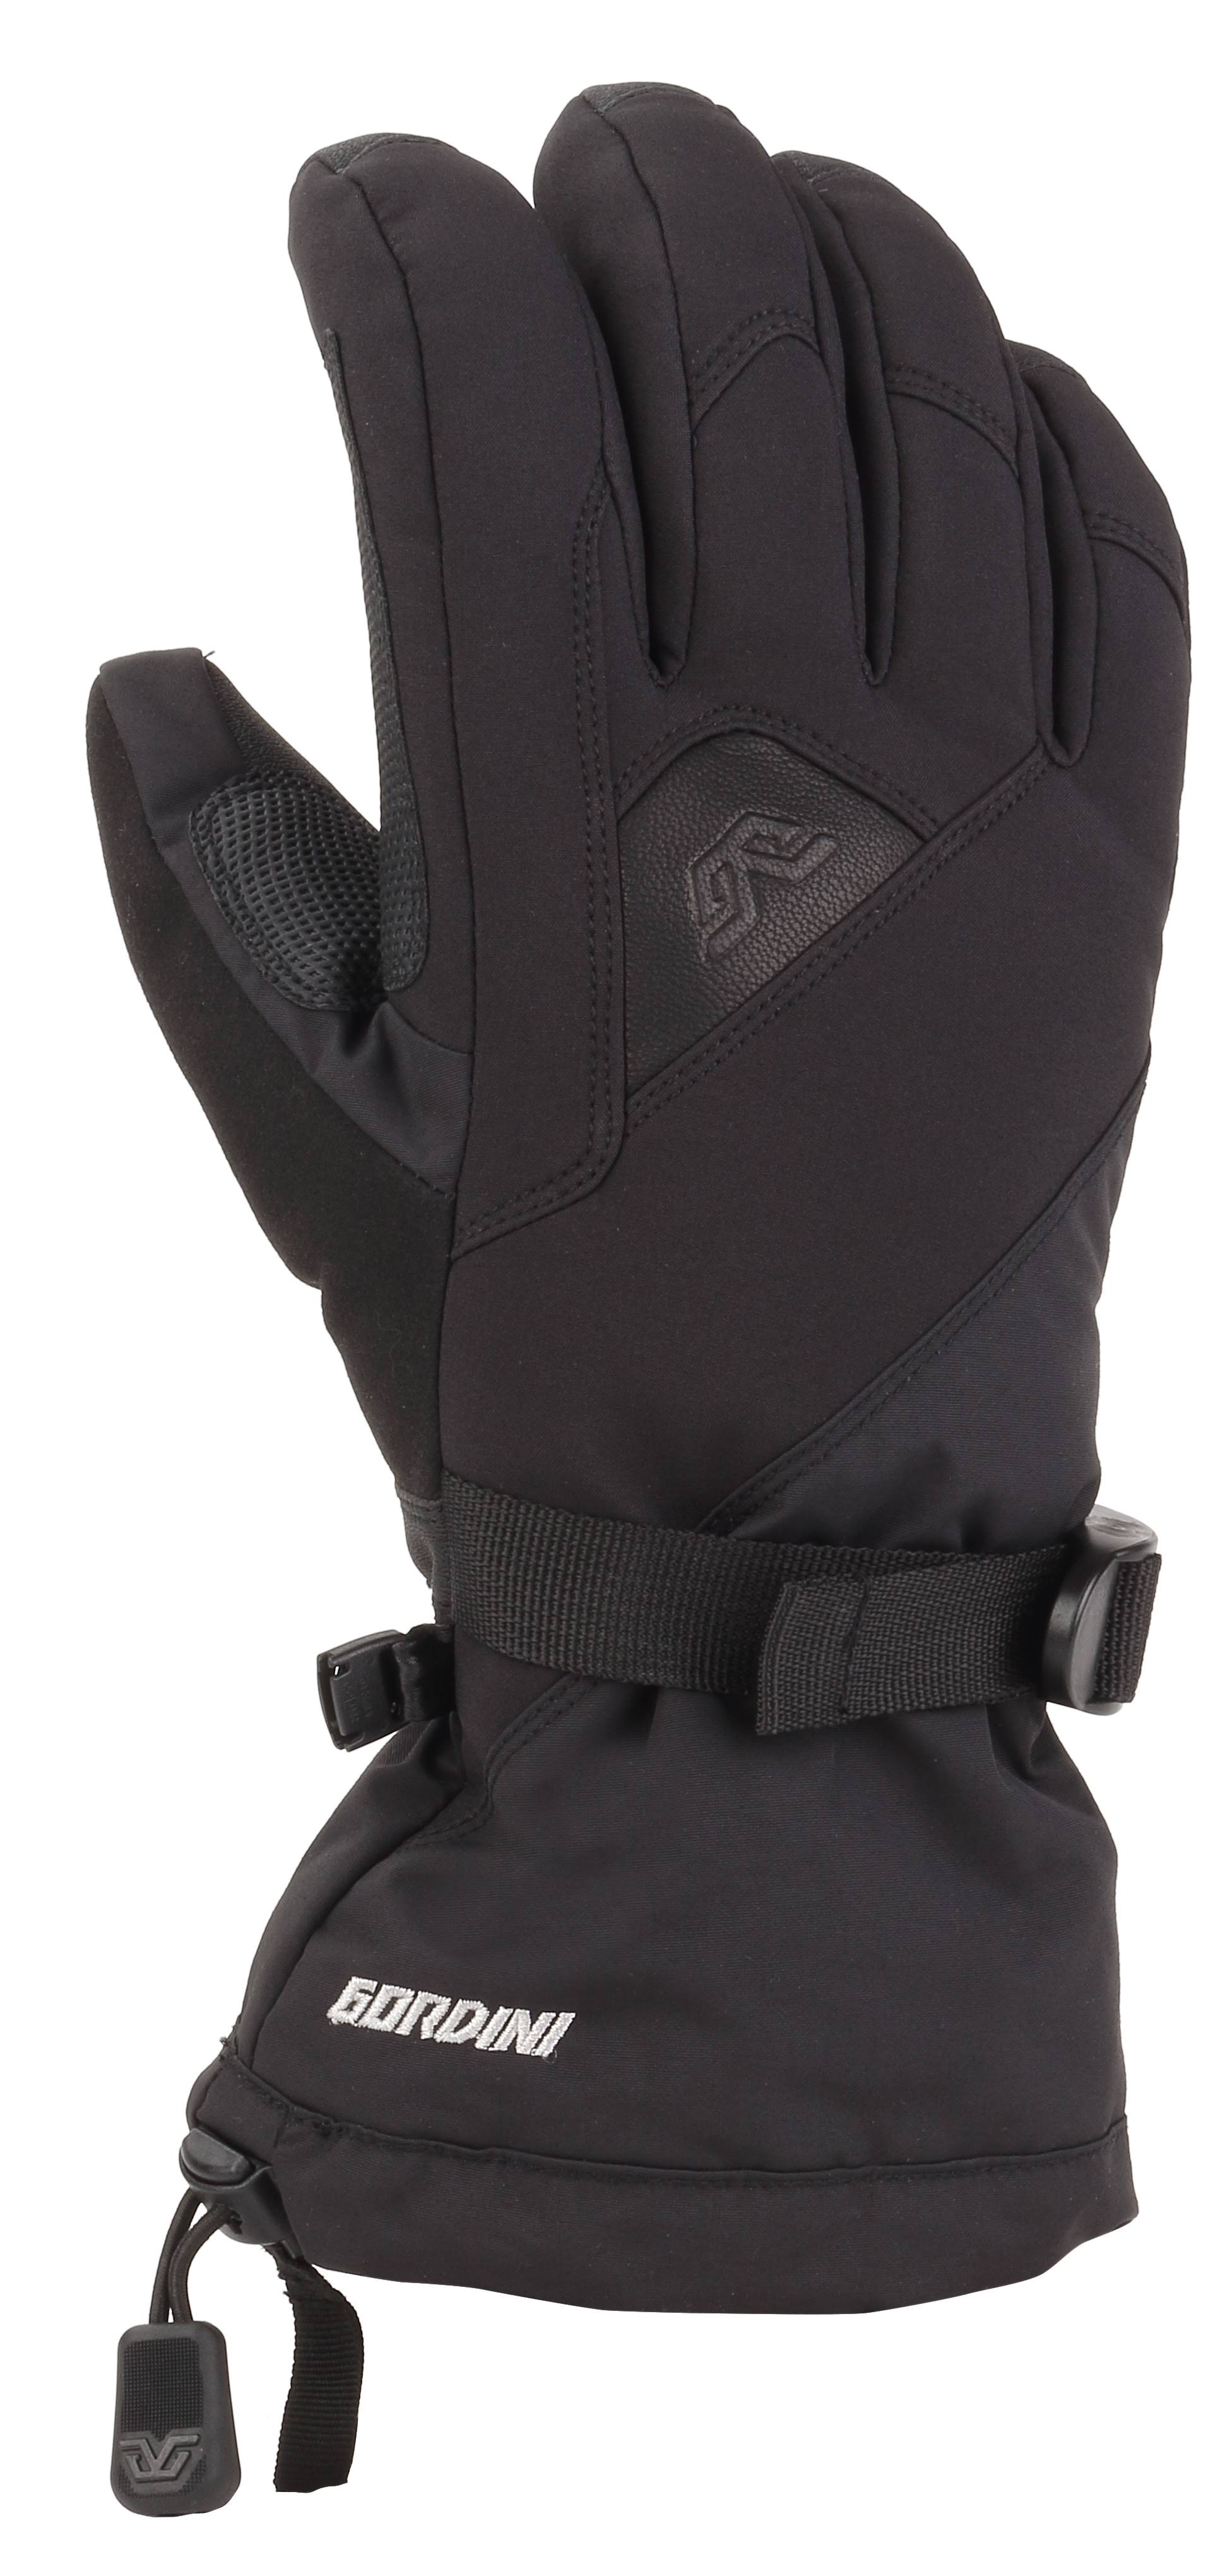 Gordini Women's Aquabloc Down Gauntlet Gloves Black M